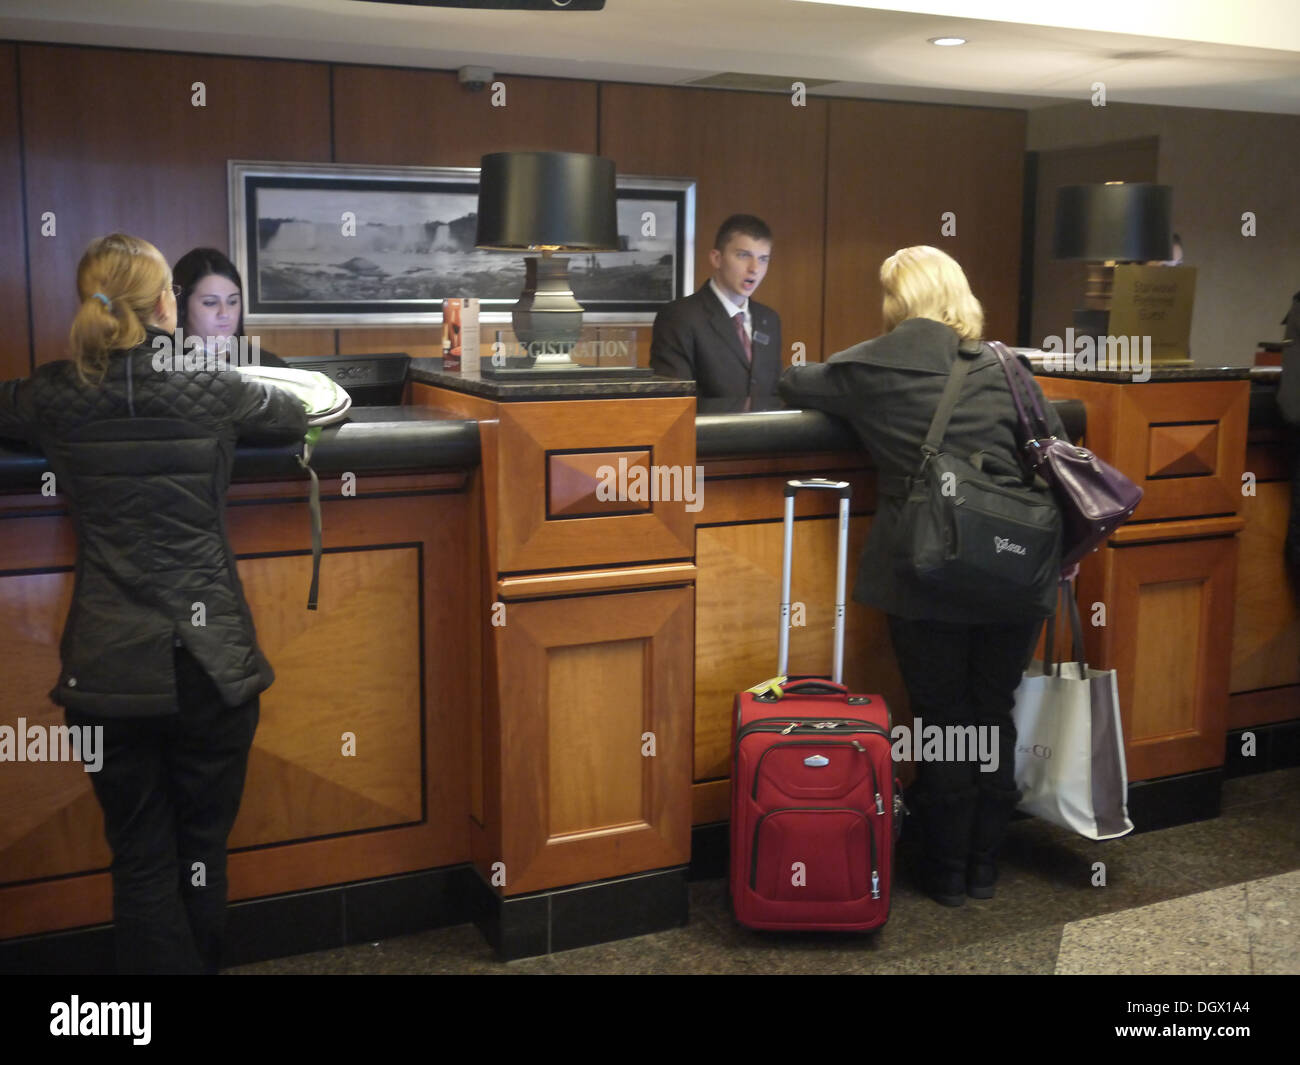 sheraton hotel check in counter lobby Stock Photo